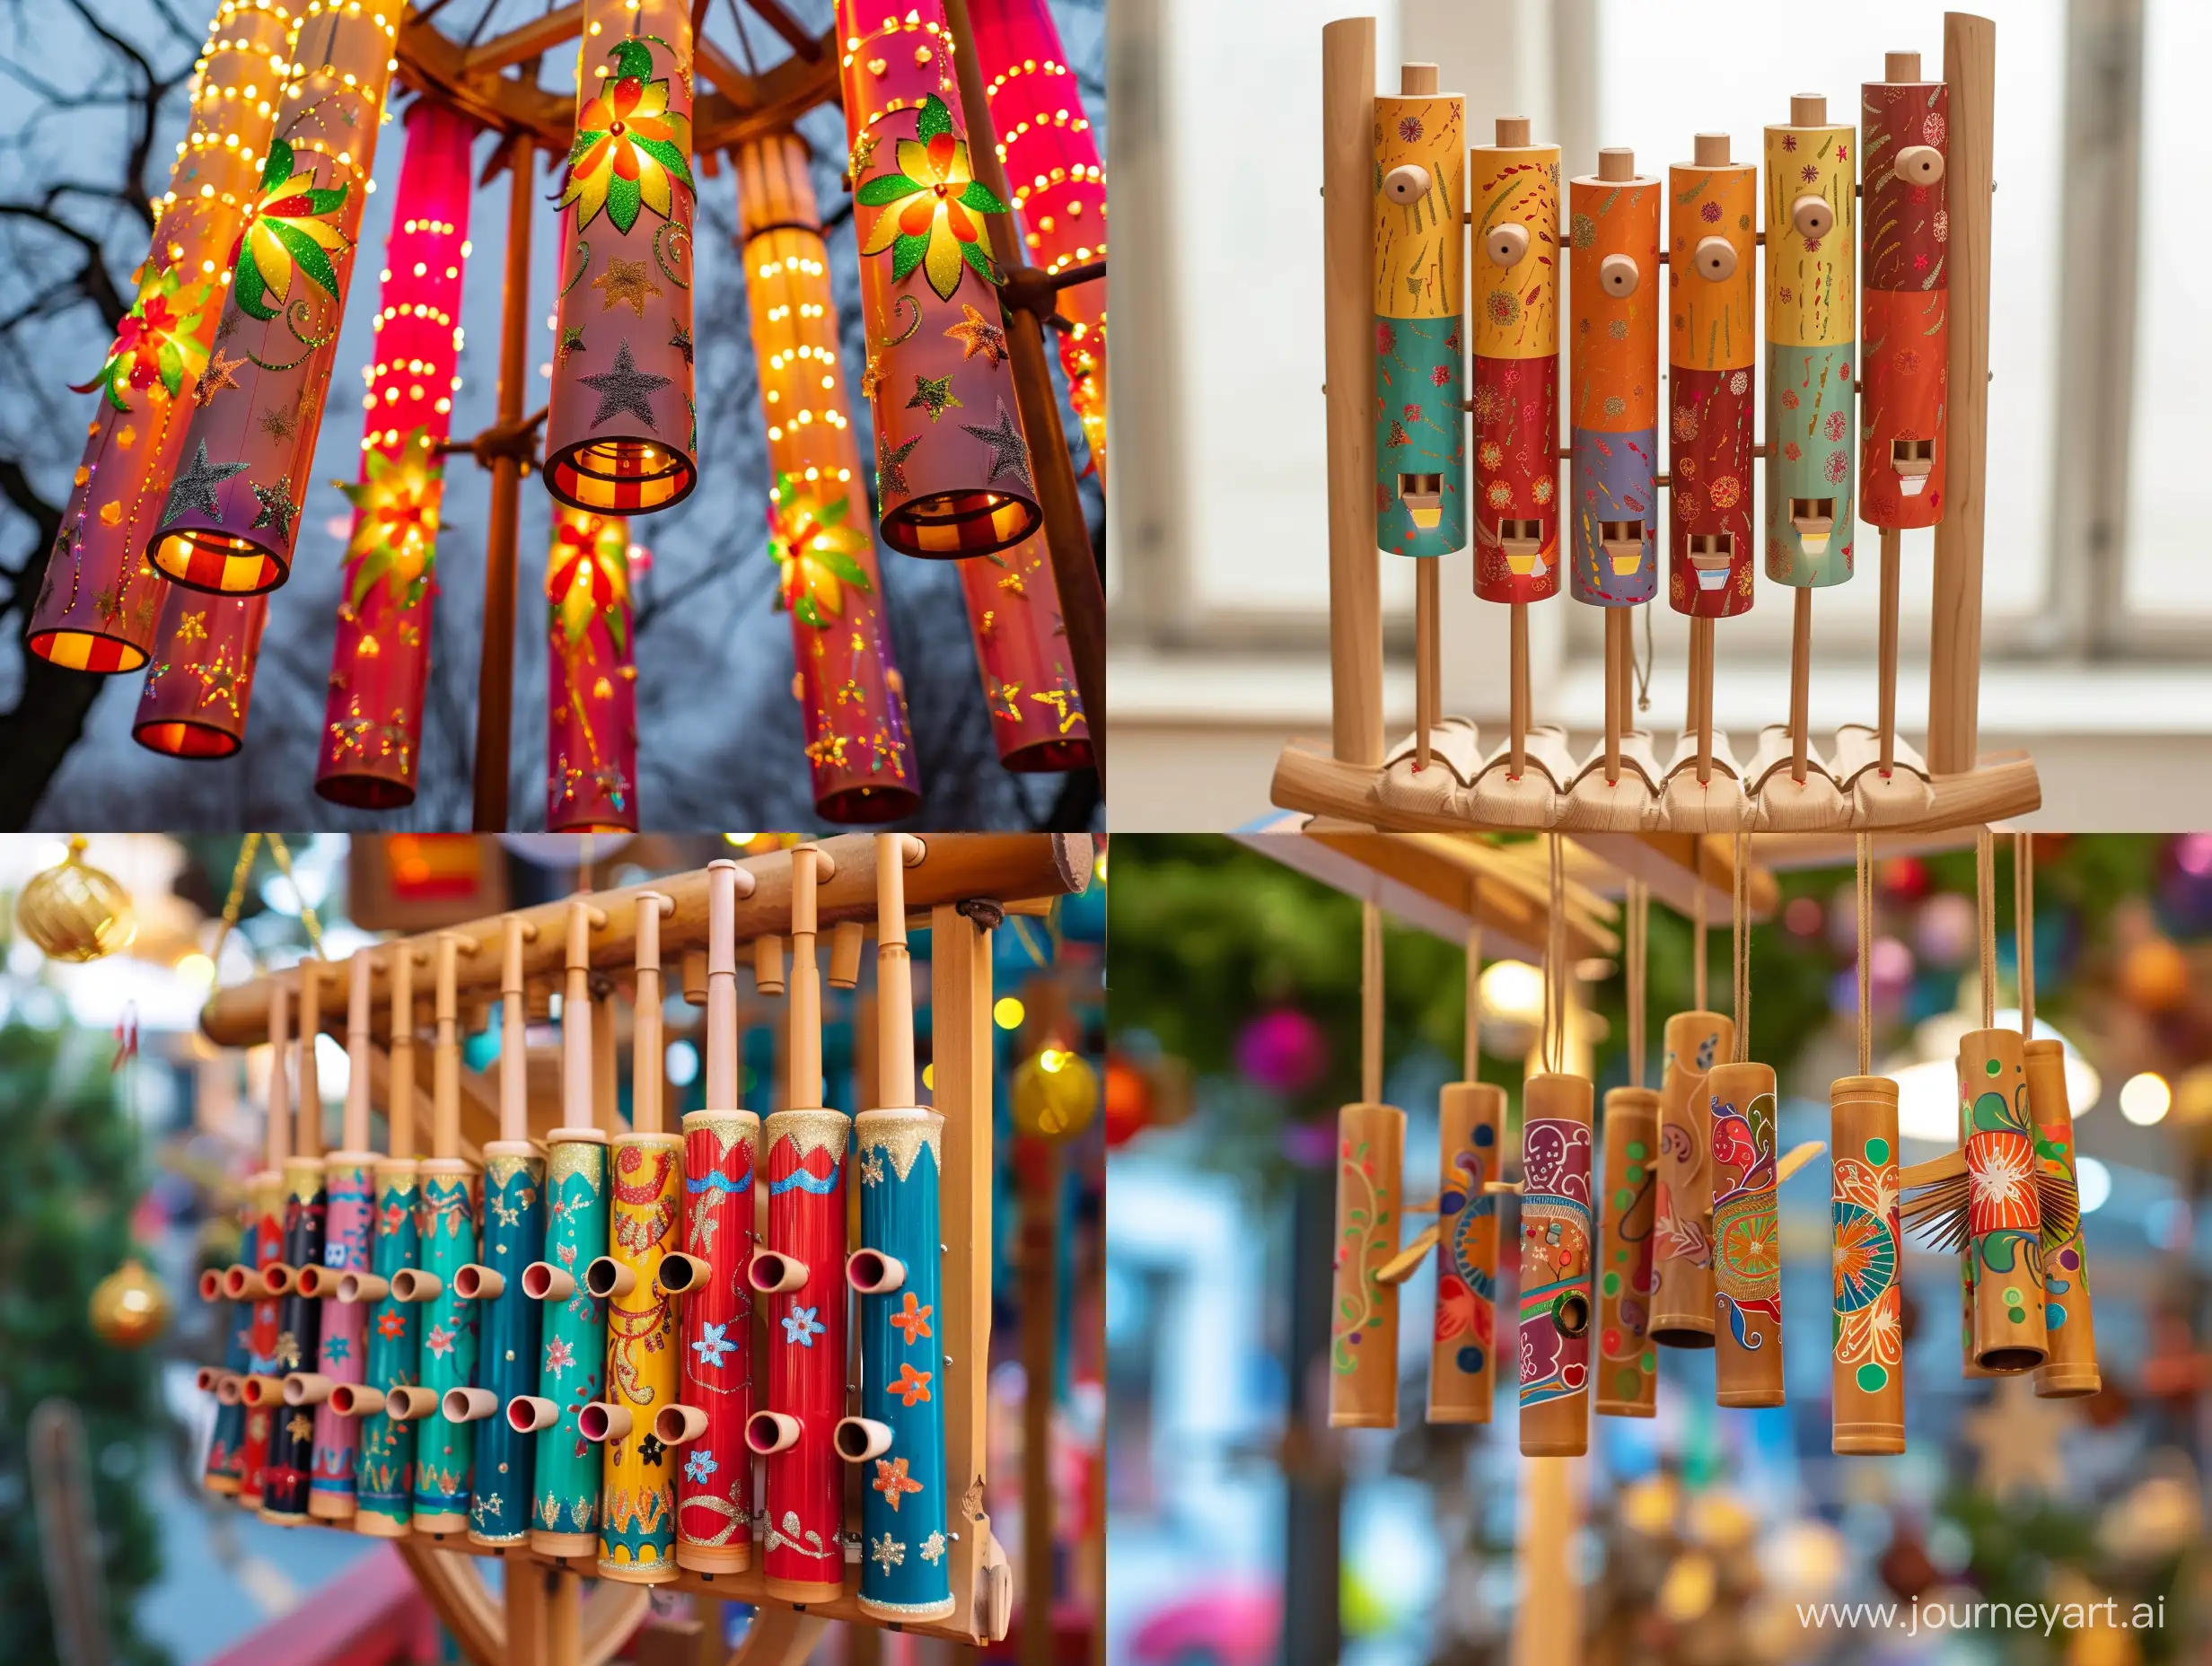 Festive-Wind-Organ-Celebration-in-Vibrant-Colors